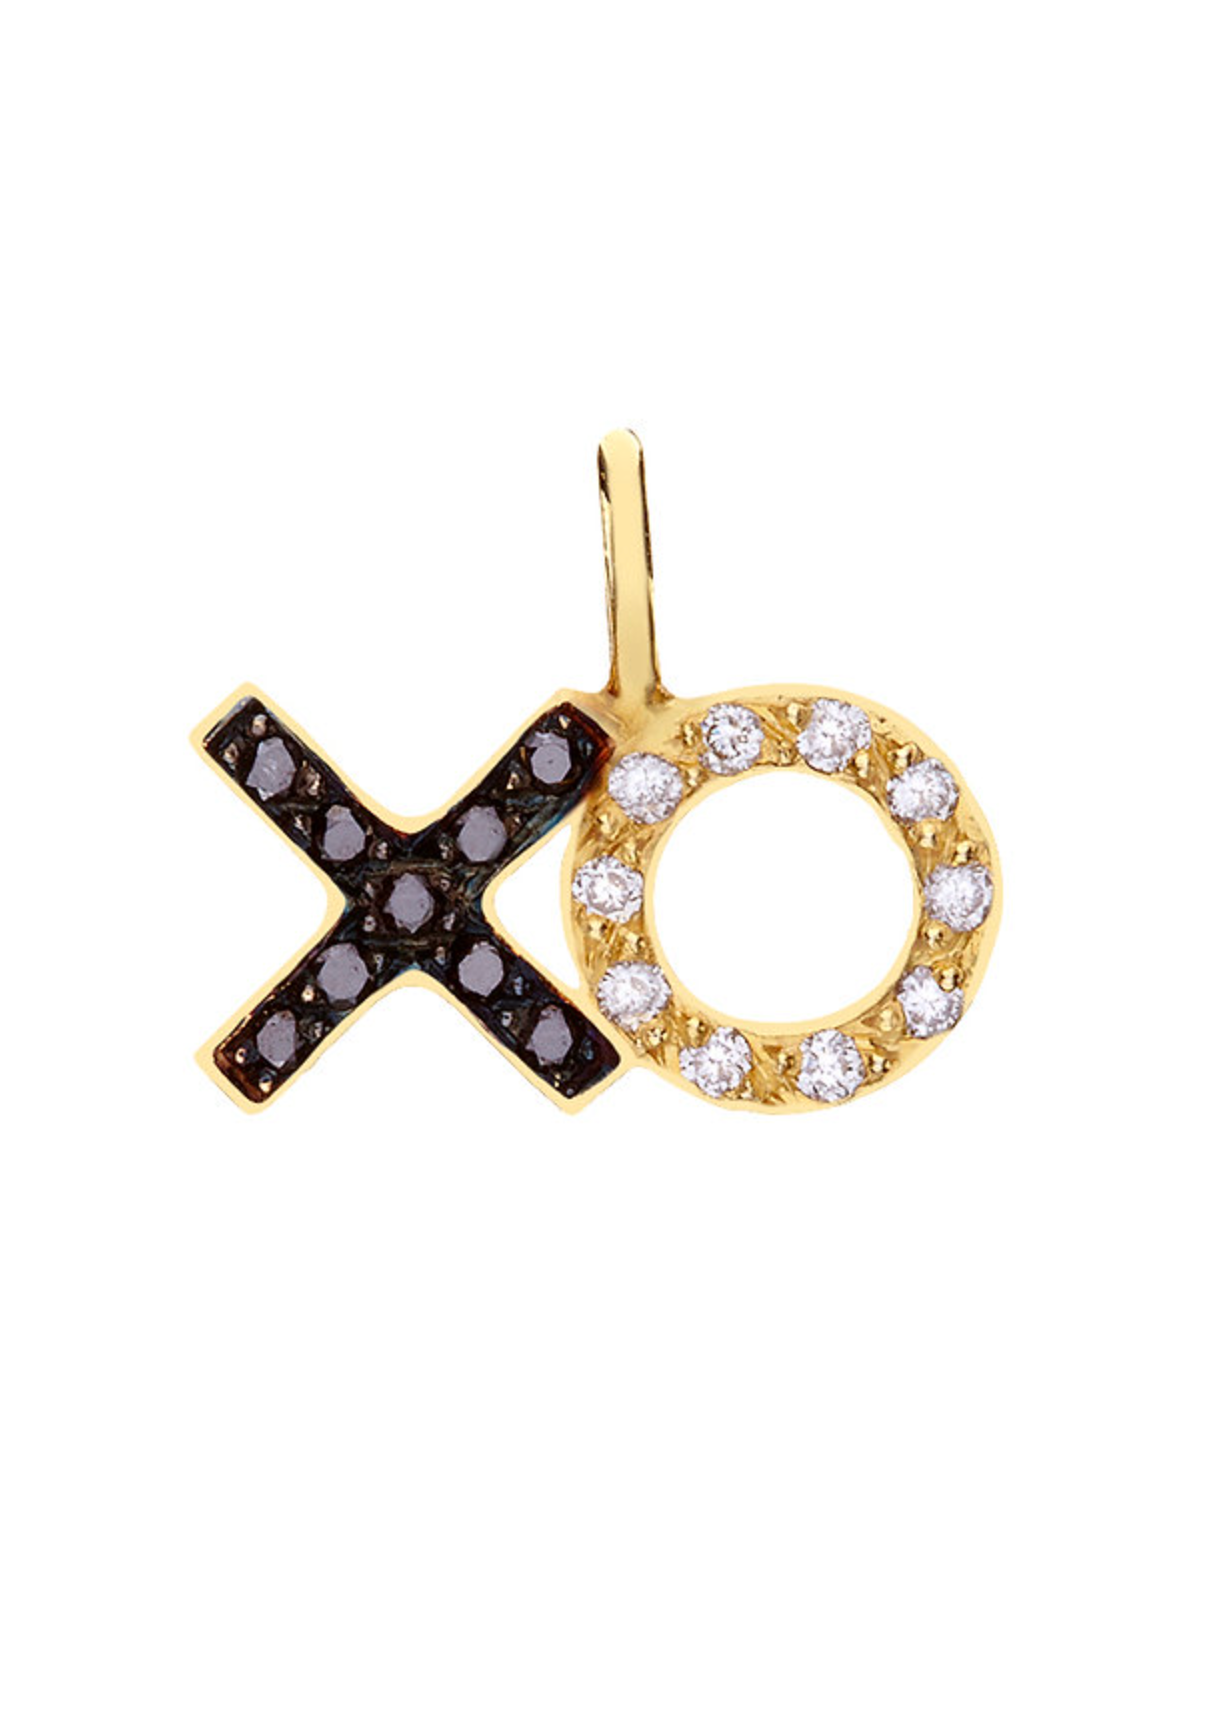 XO Charm with Black and White Diamonds